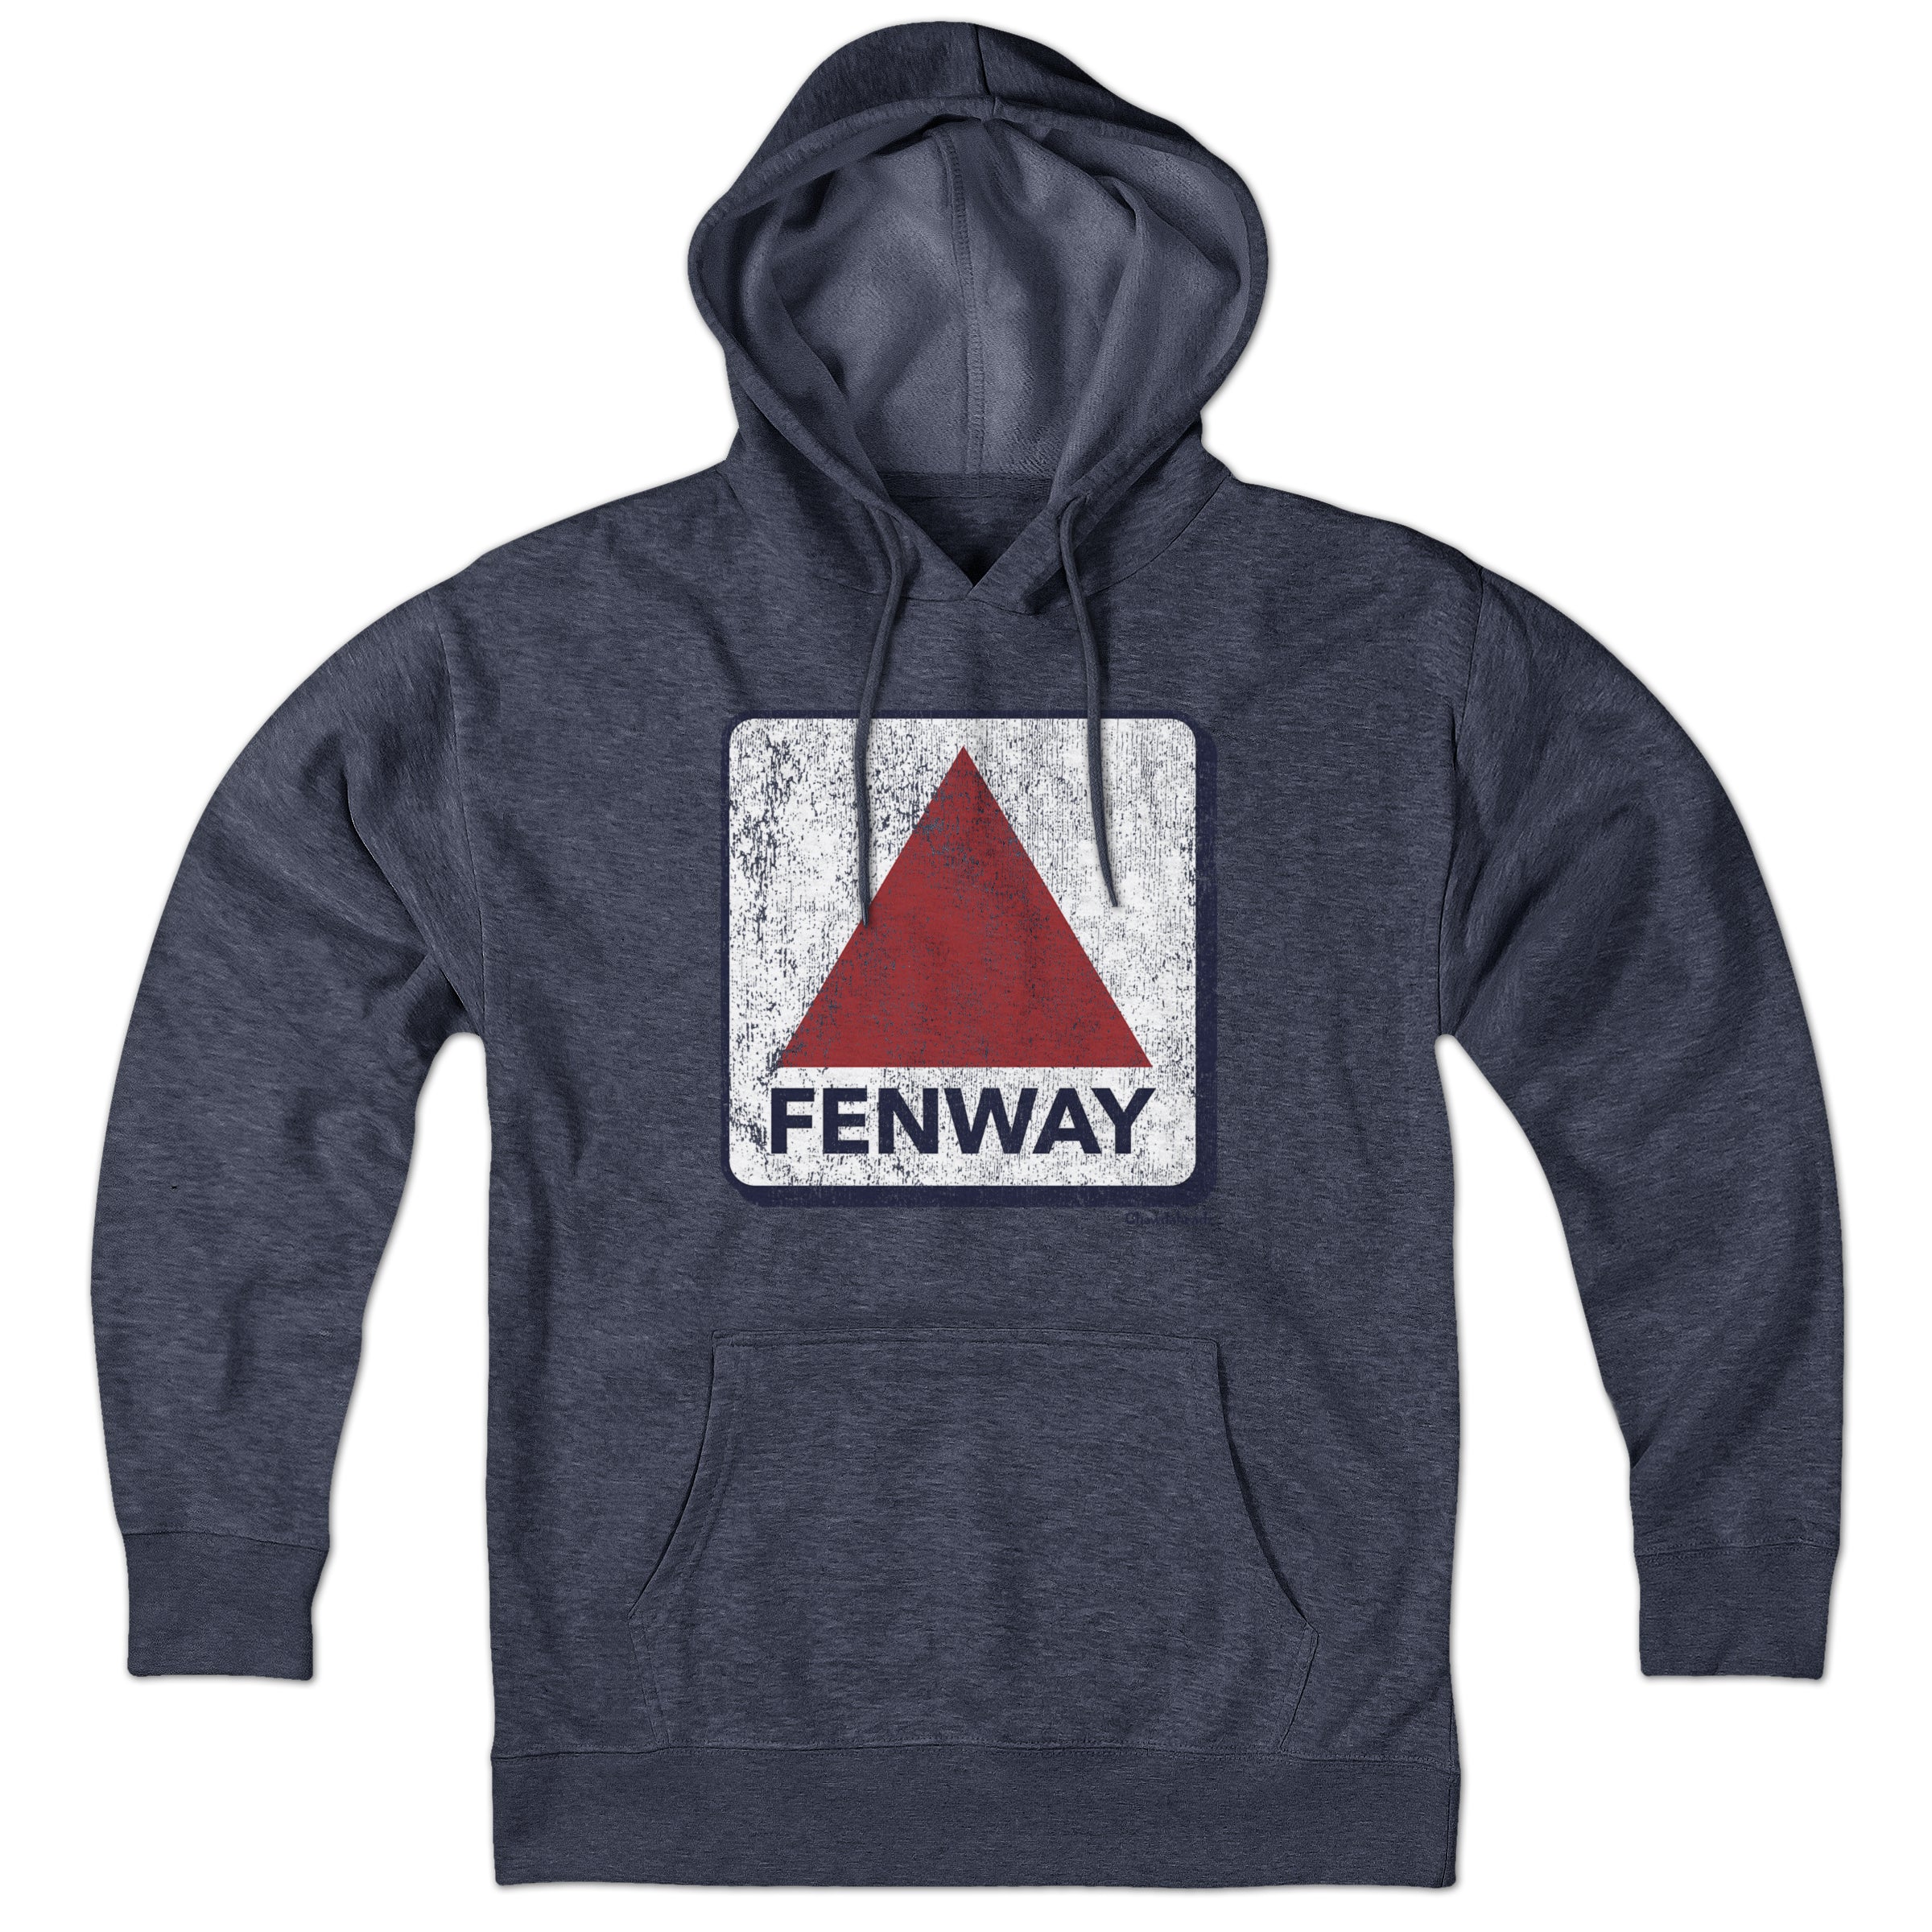 Fenway Dog T-Shirt  Dog tshirt, Hooded sweatshirt men, Friends in